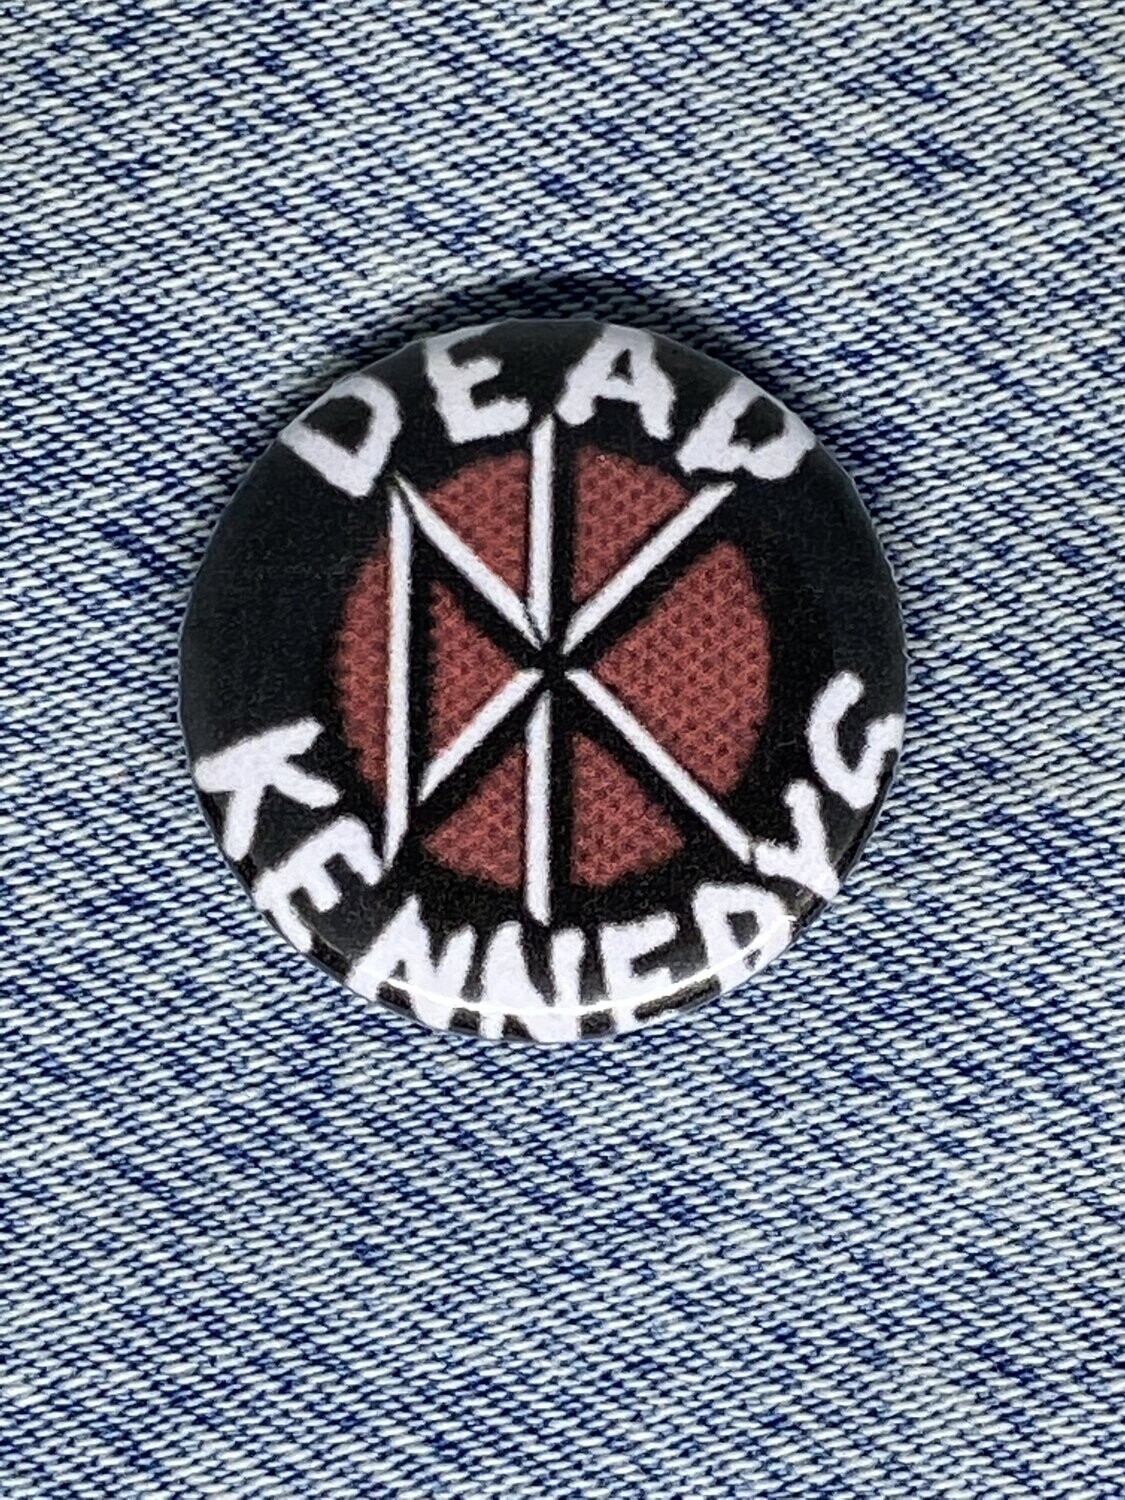 Dead Kennedys Badge